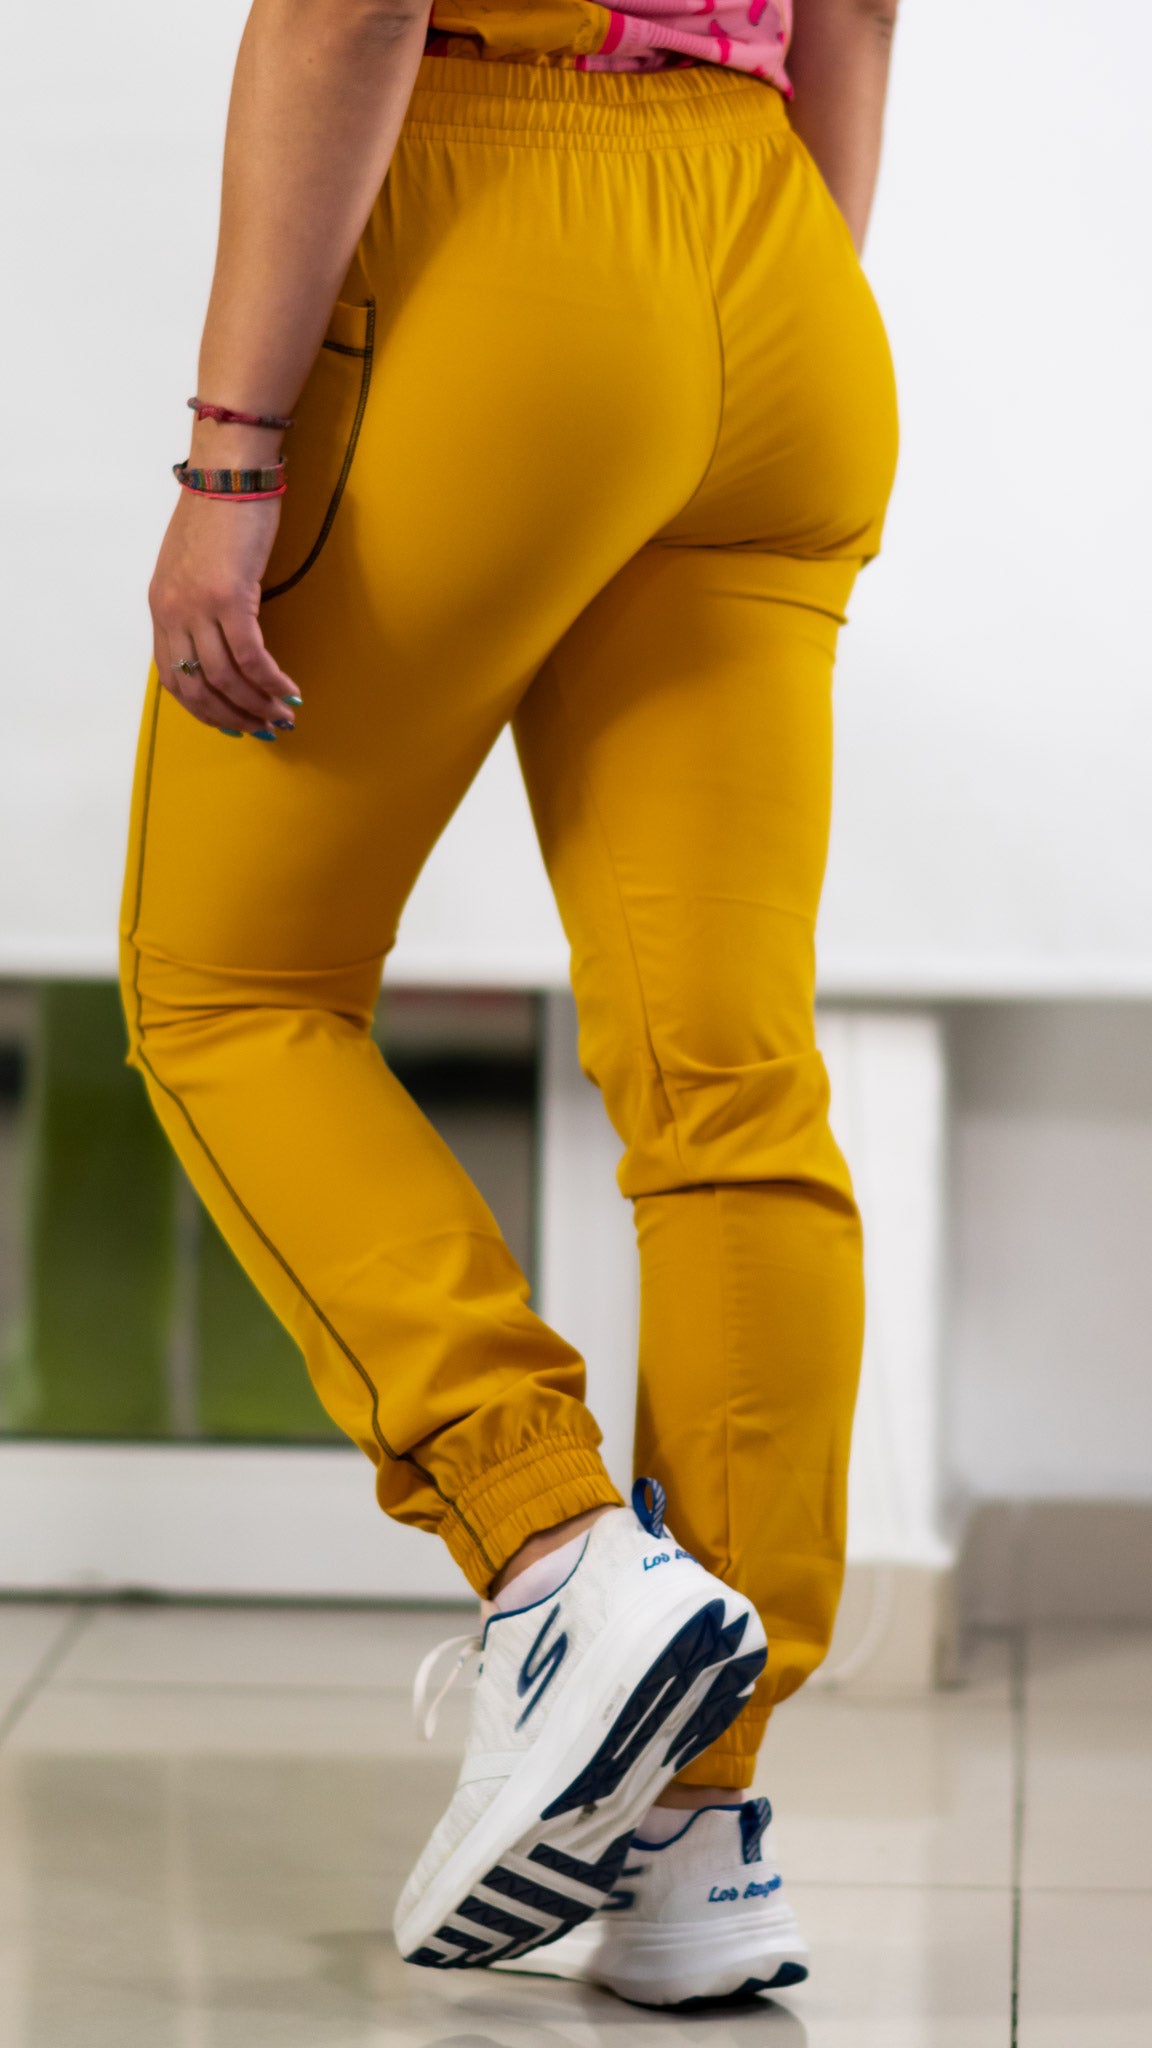 Loose mustard bottoms | Mustard pants outfit, Mustard pants, Fashion